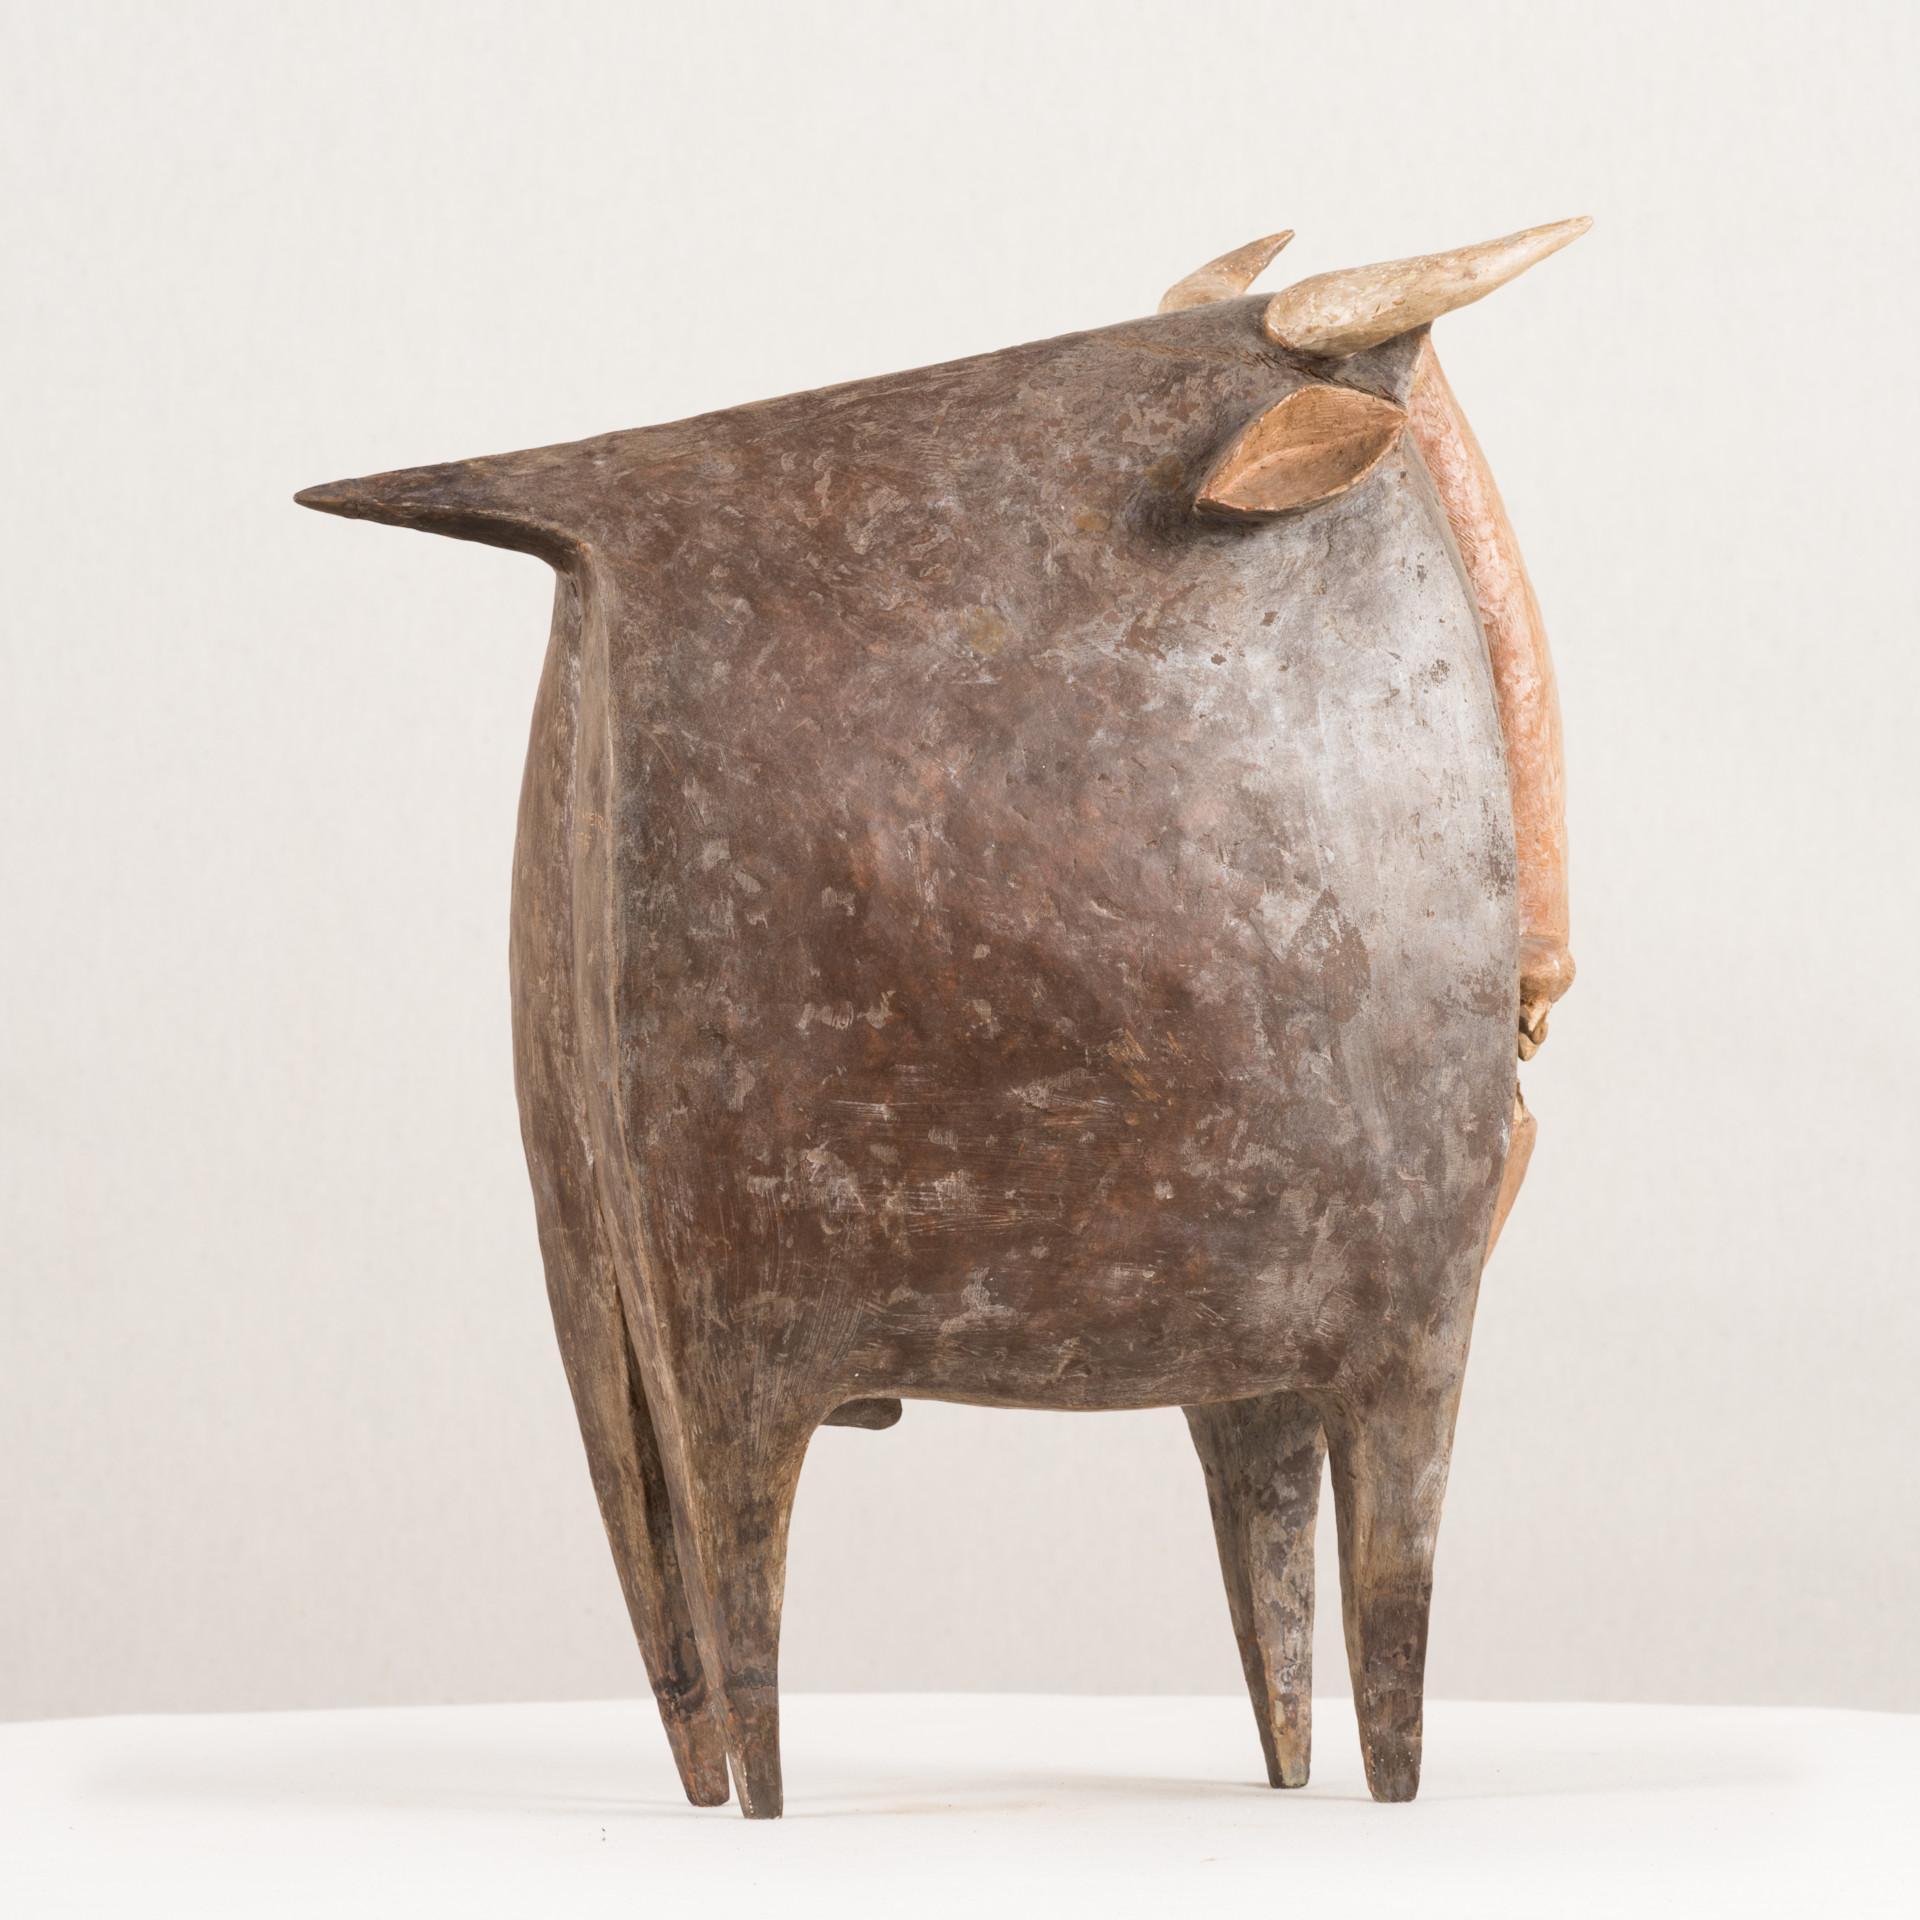 Touro, 1955, Jorge Vieira, Modern Art, Terracotta Sculpture, Brown and grey For Sale 4